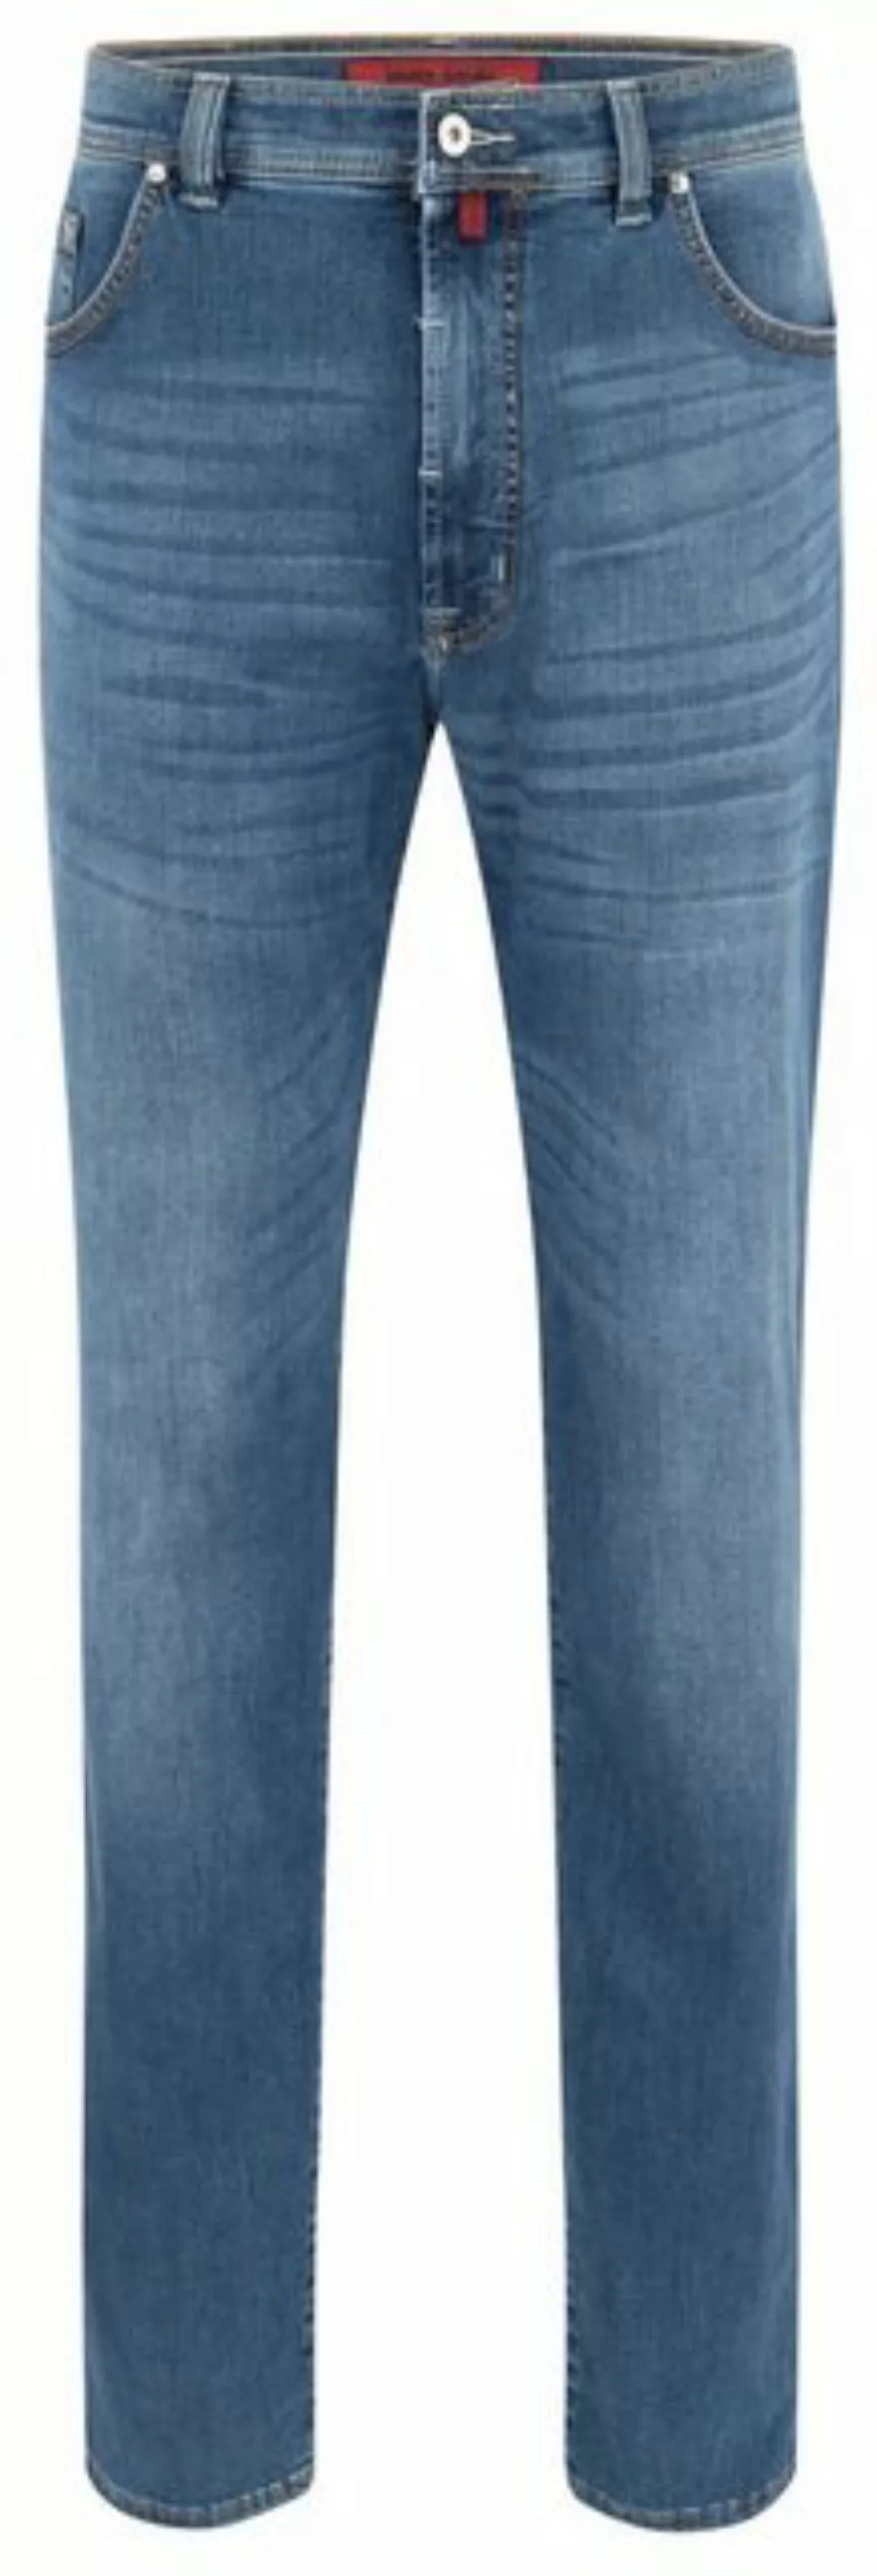 Pierre Cardin 5-Pocket-Jeans PIERRE CARDIN DIJON dark blue used 32310 7004. günstig online kaufen